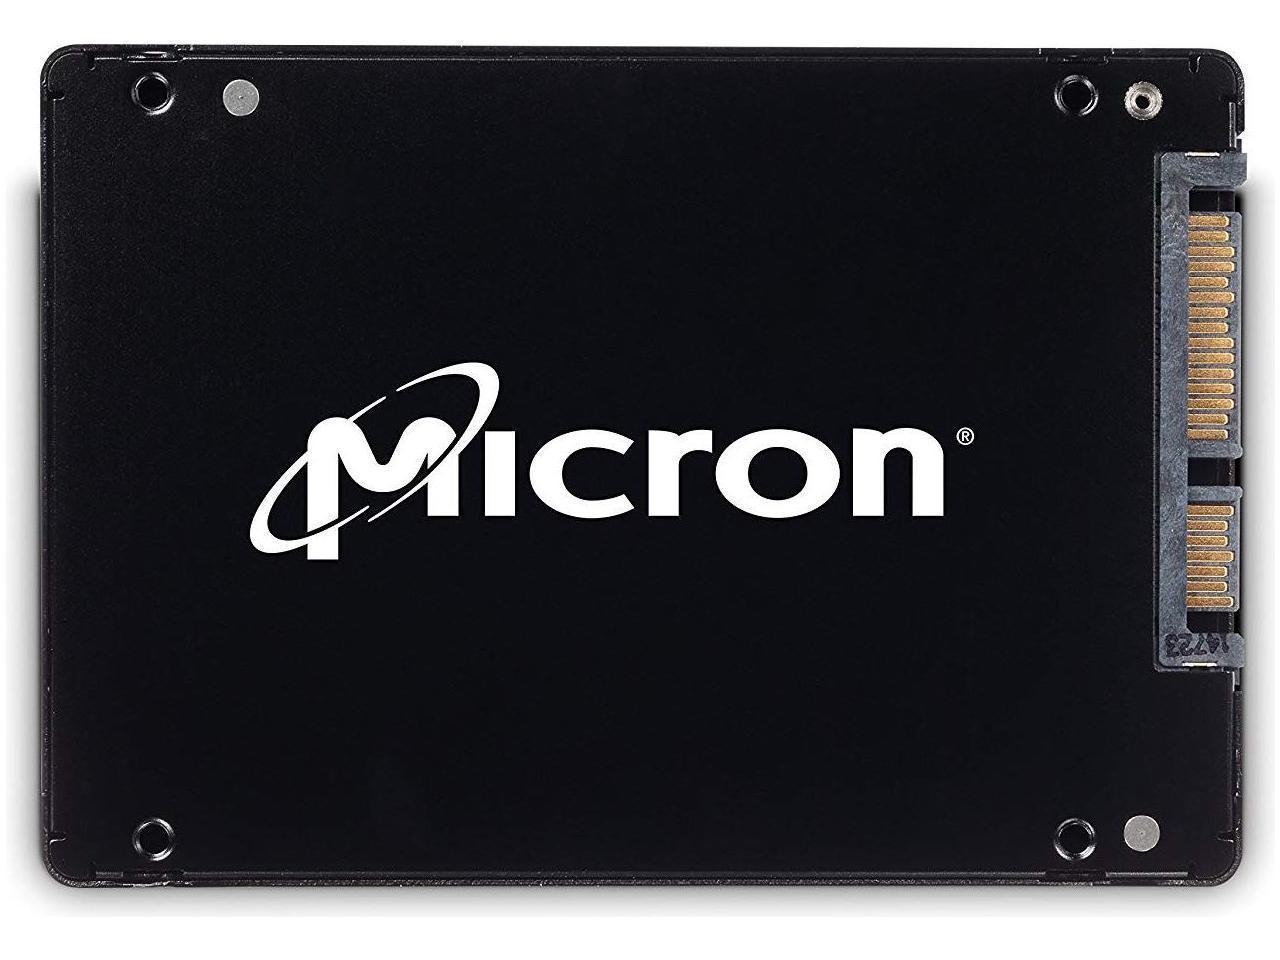 512GB Micron SSD 1100 2.5" SATA 3D NAND Internal SSD W/ Microsoft Windows 10 PRO 